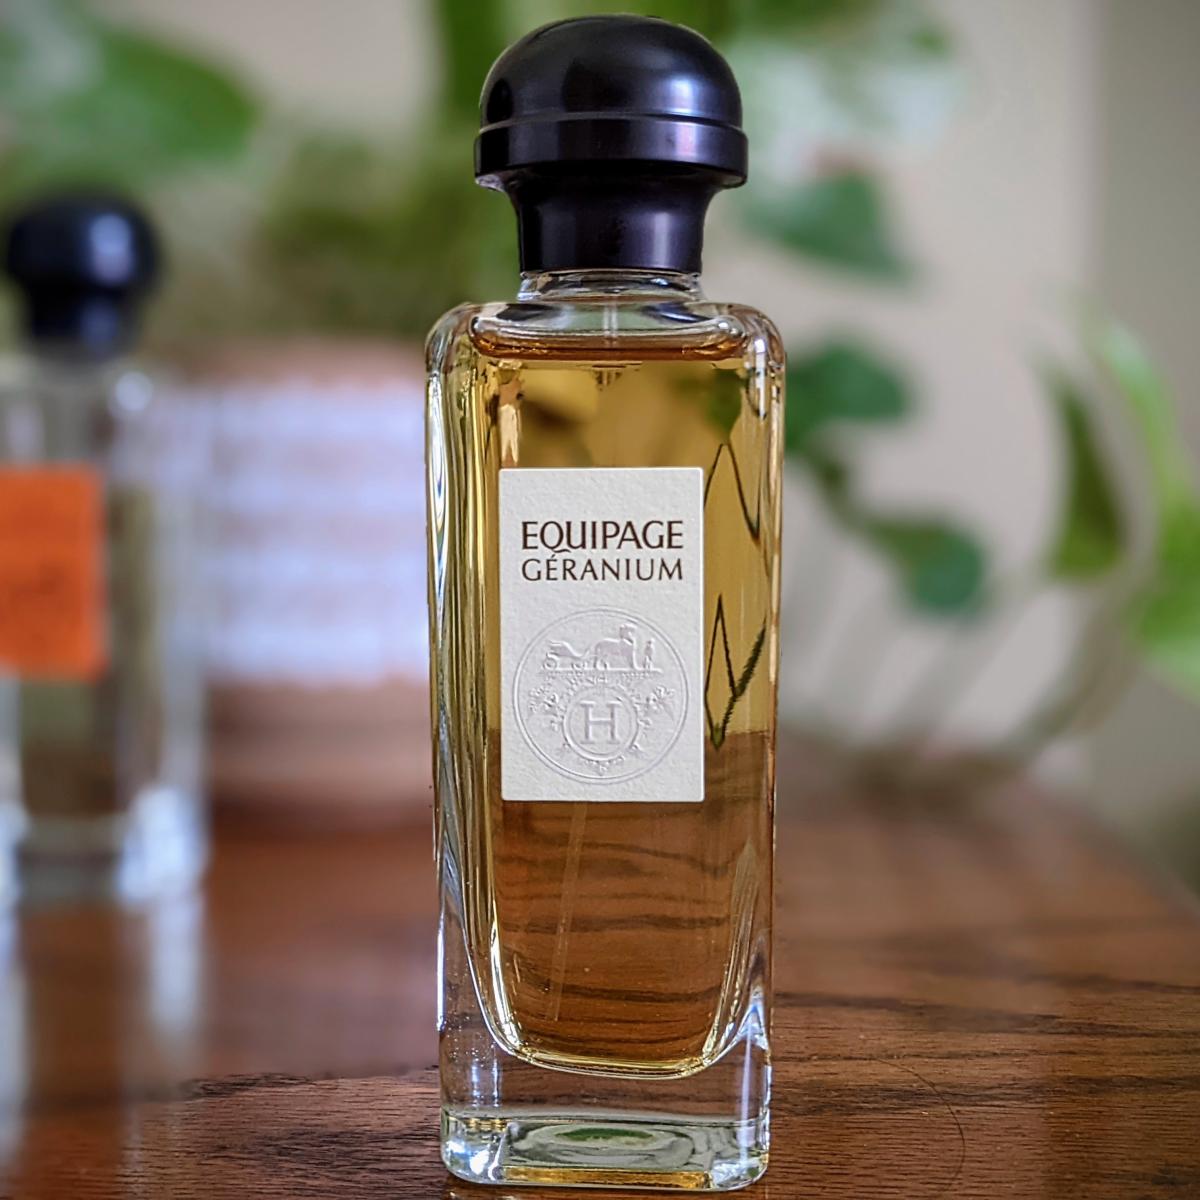 Equipage Geranium Hermès cologne - a fragrance for men 2015